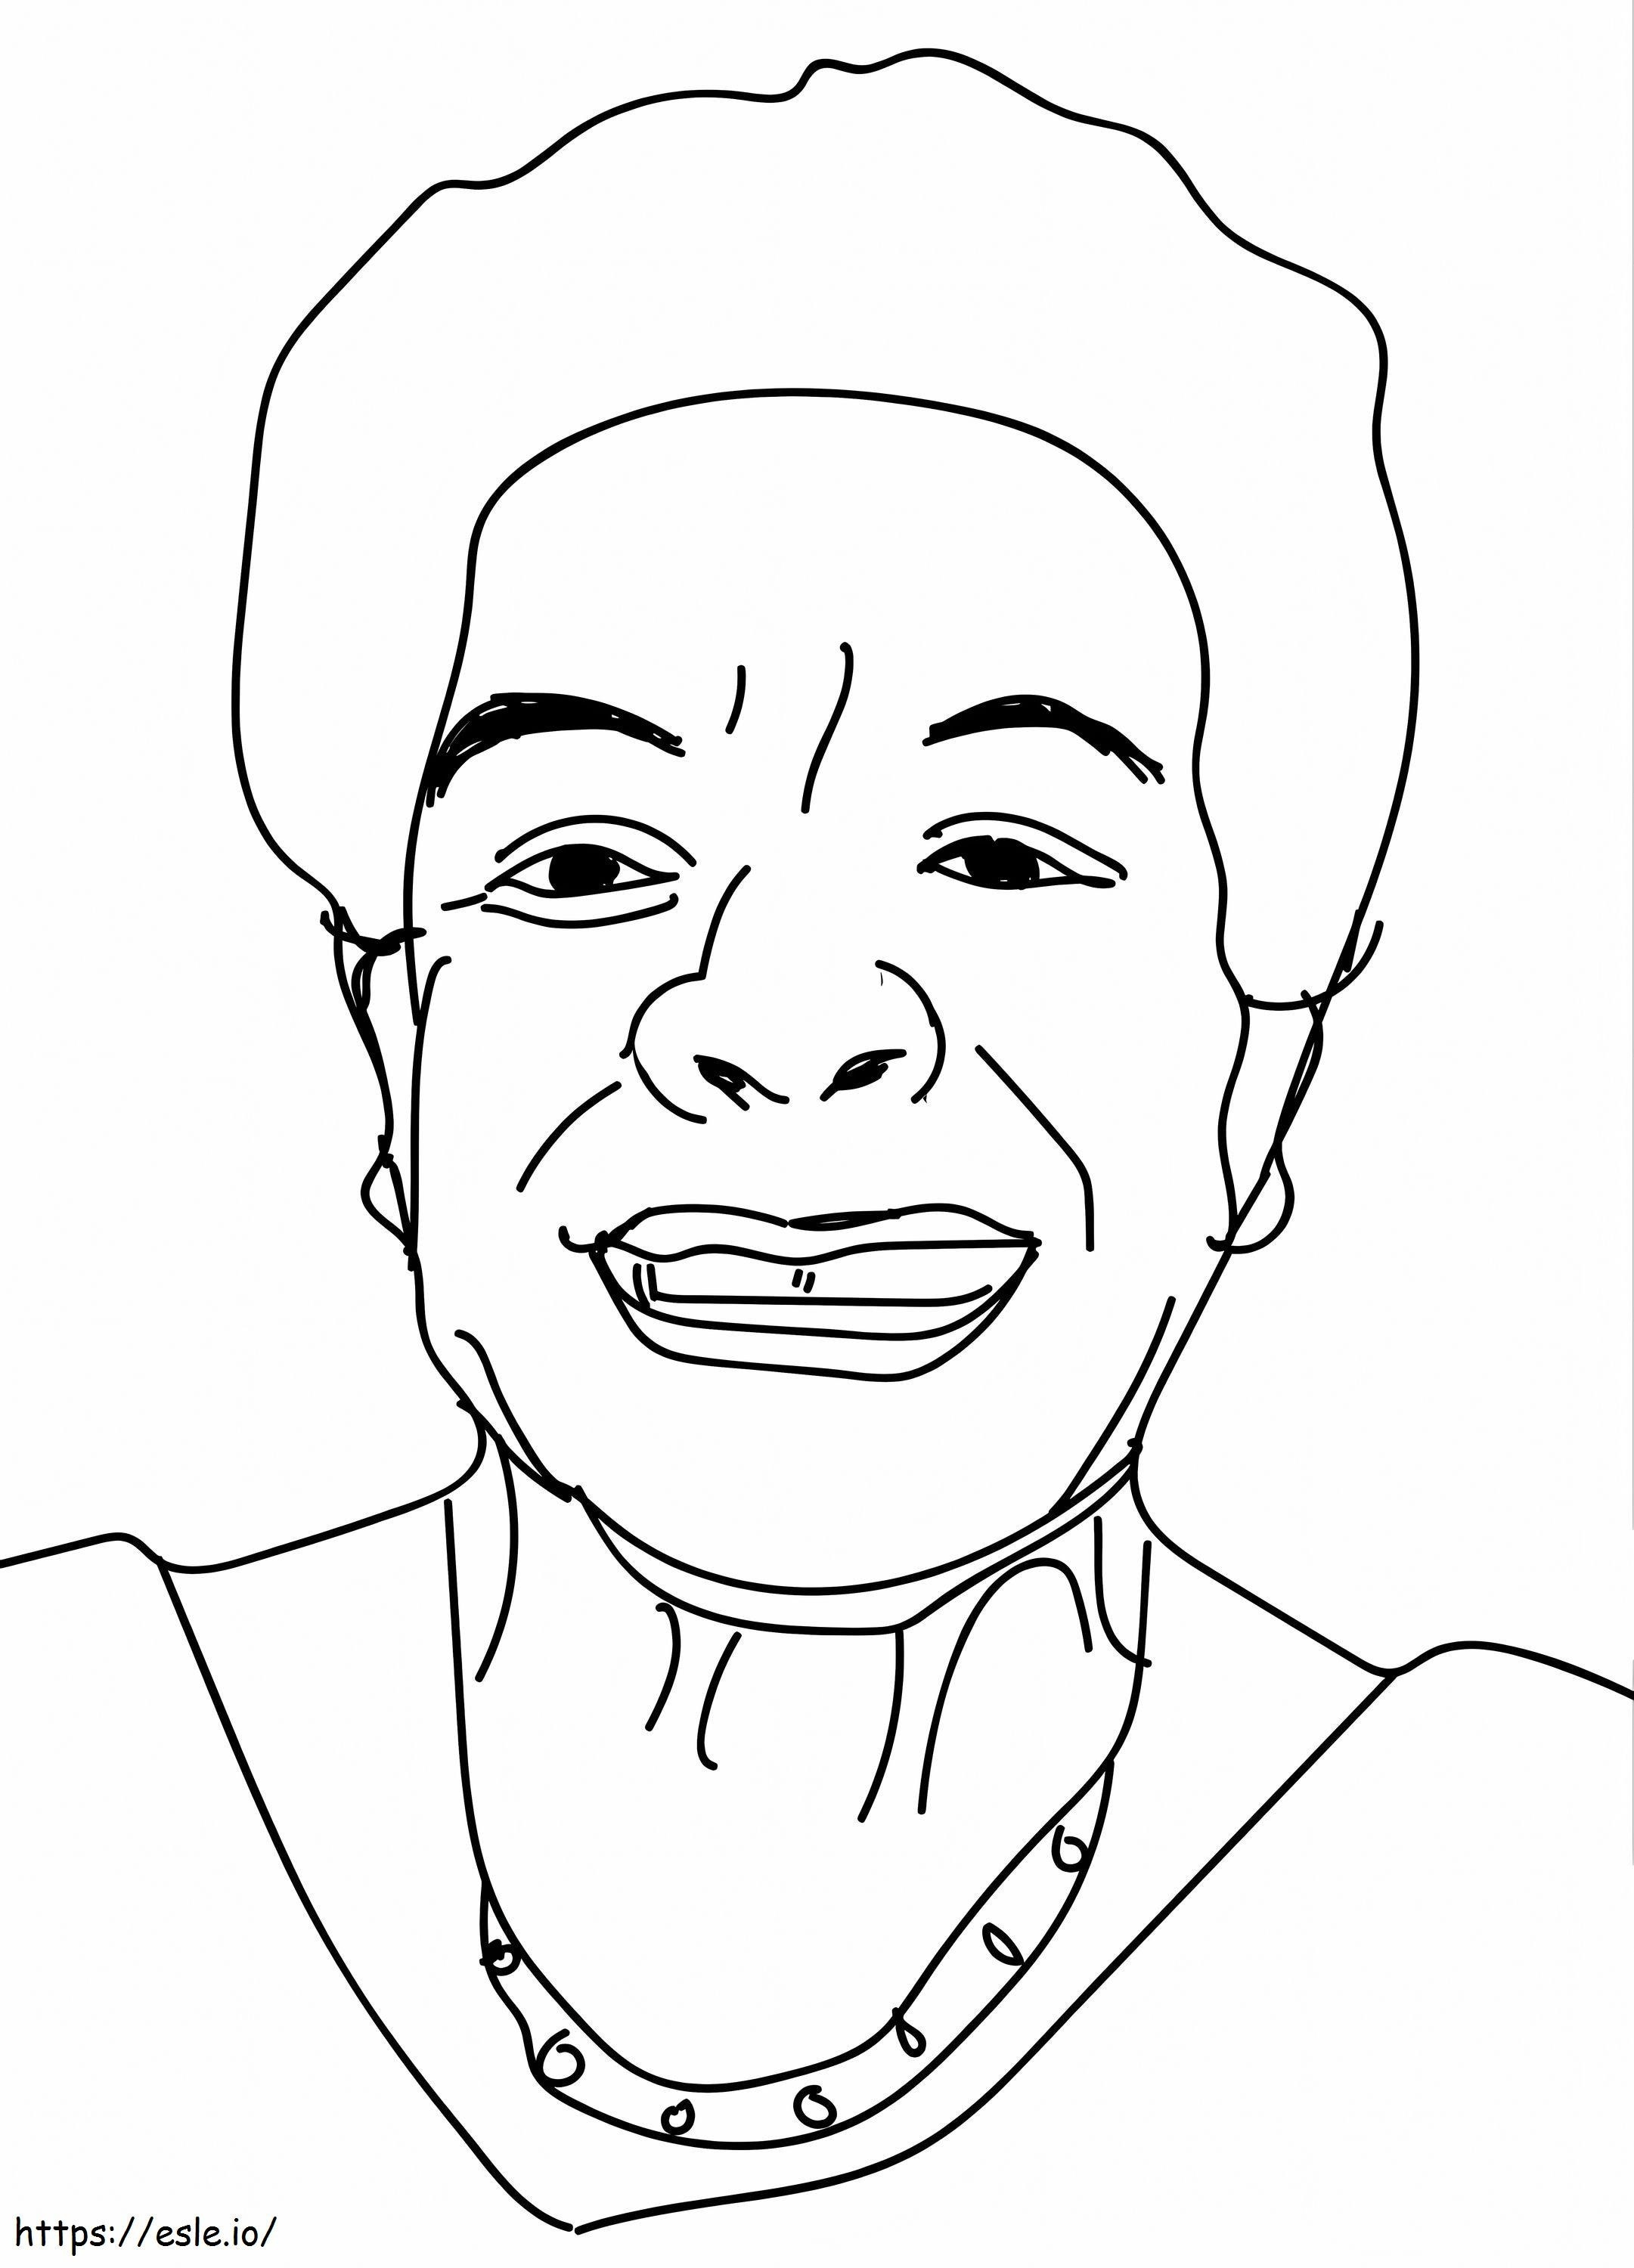 Maya Angelou 2 coloring page